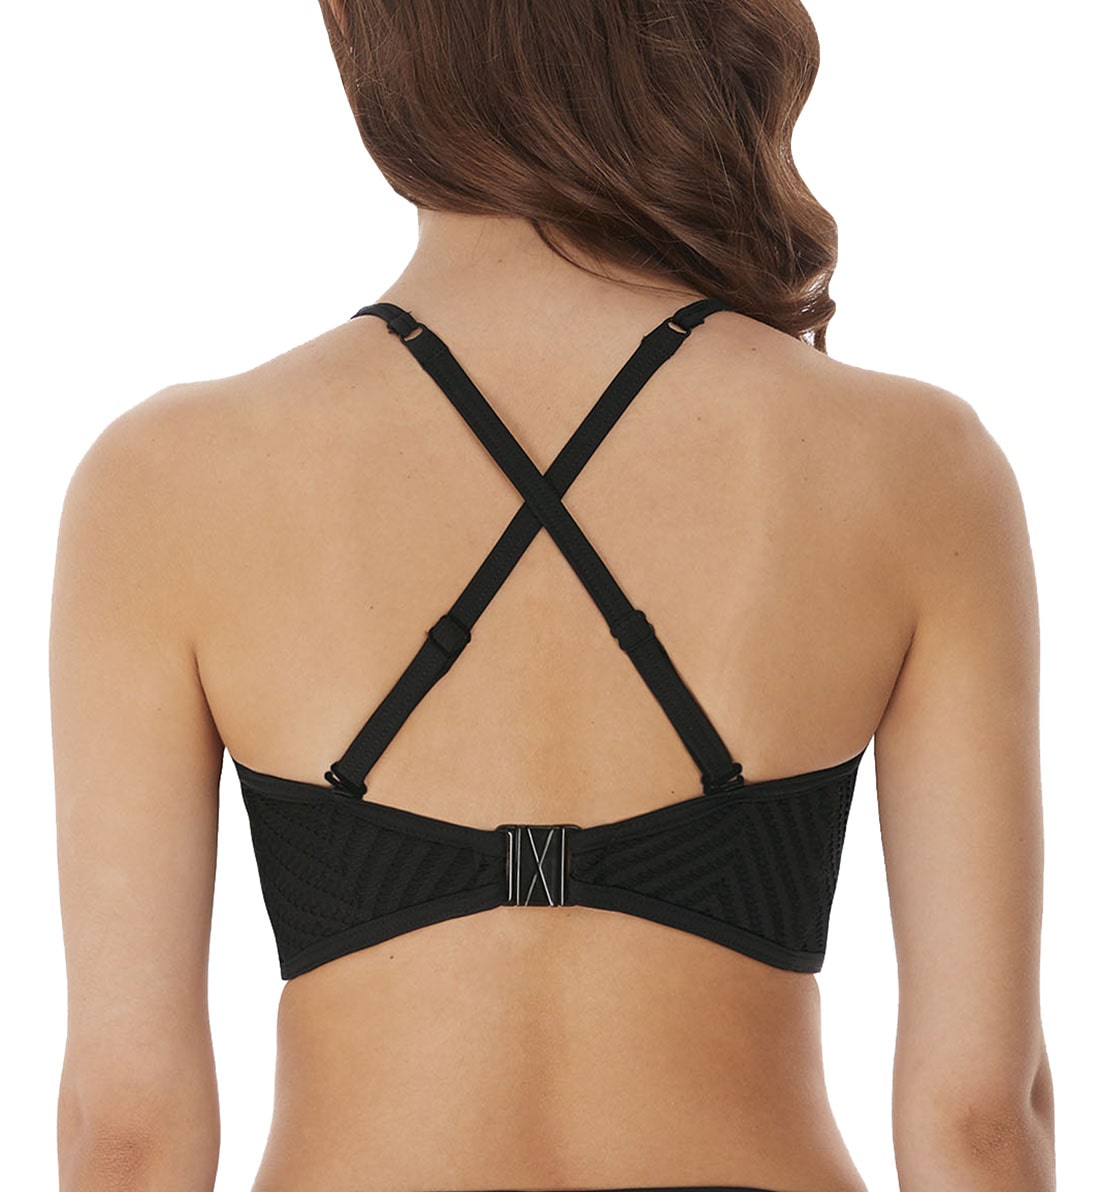 Freya Urban Convertible Concealed Underwire Bralette Bikini Top (6961),28F,Night - Night,28F